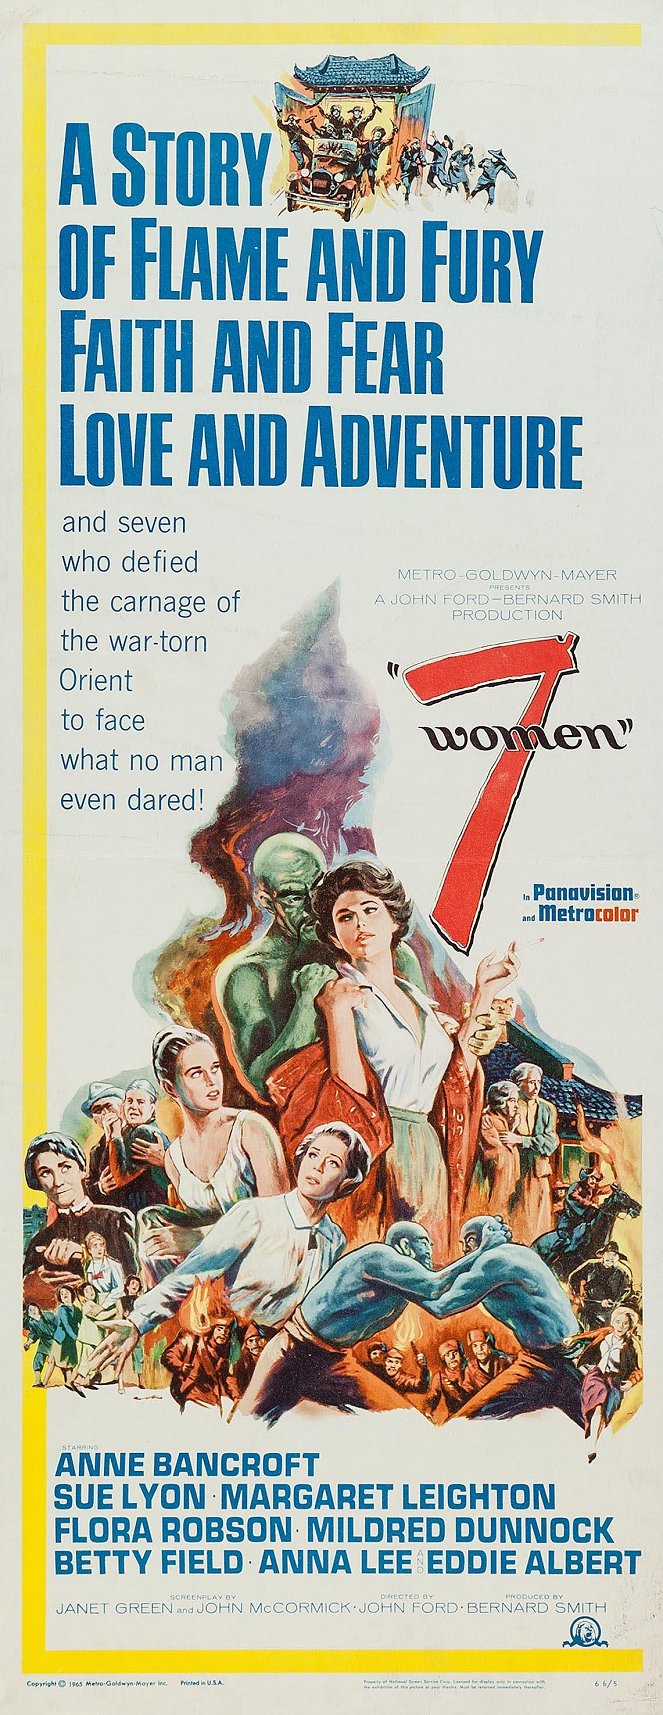 7 Women - Posters